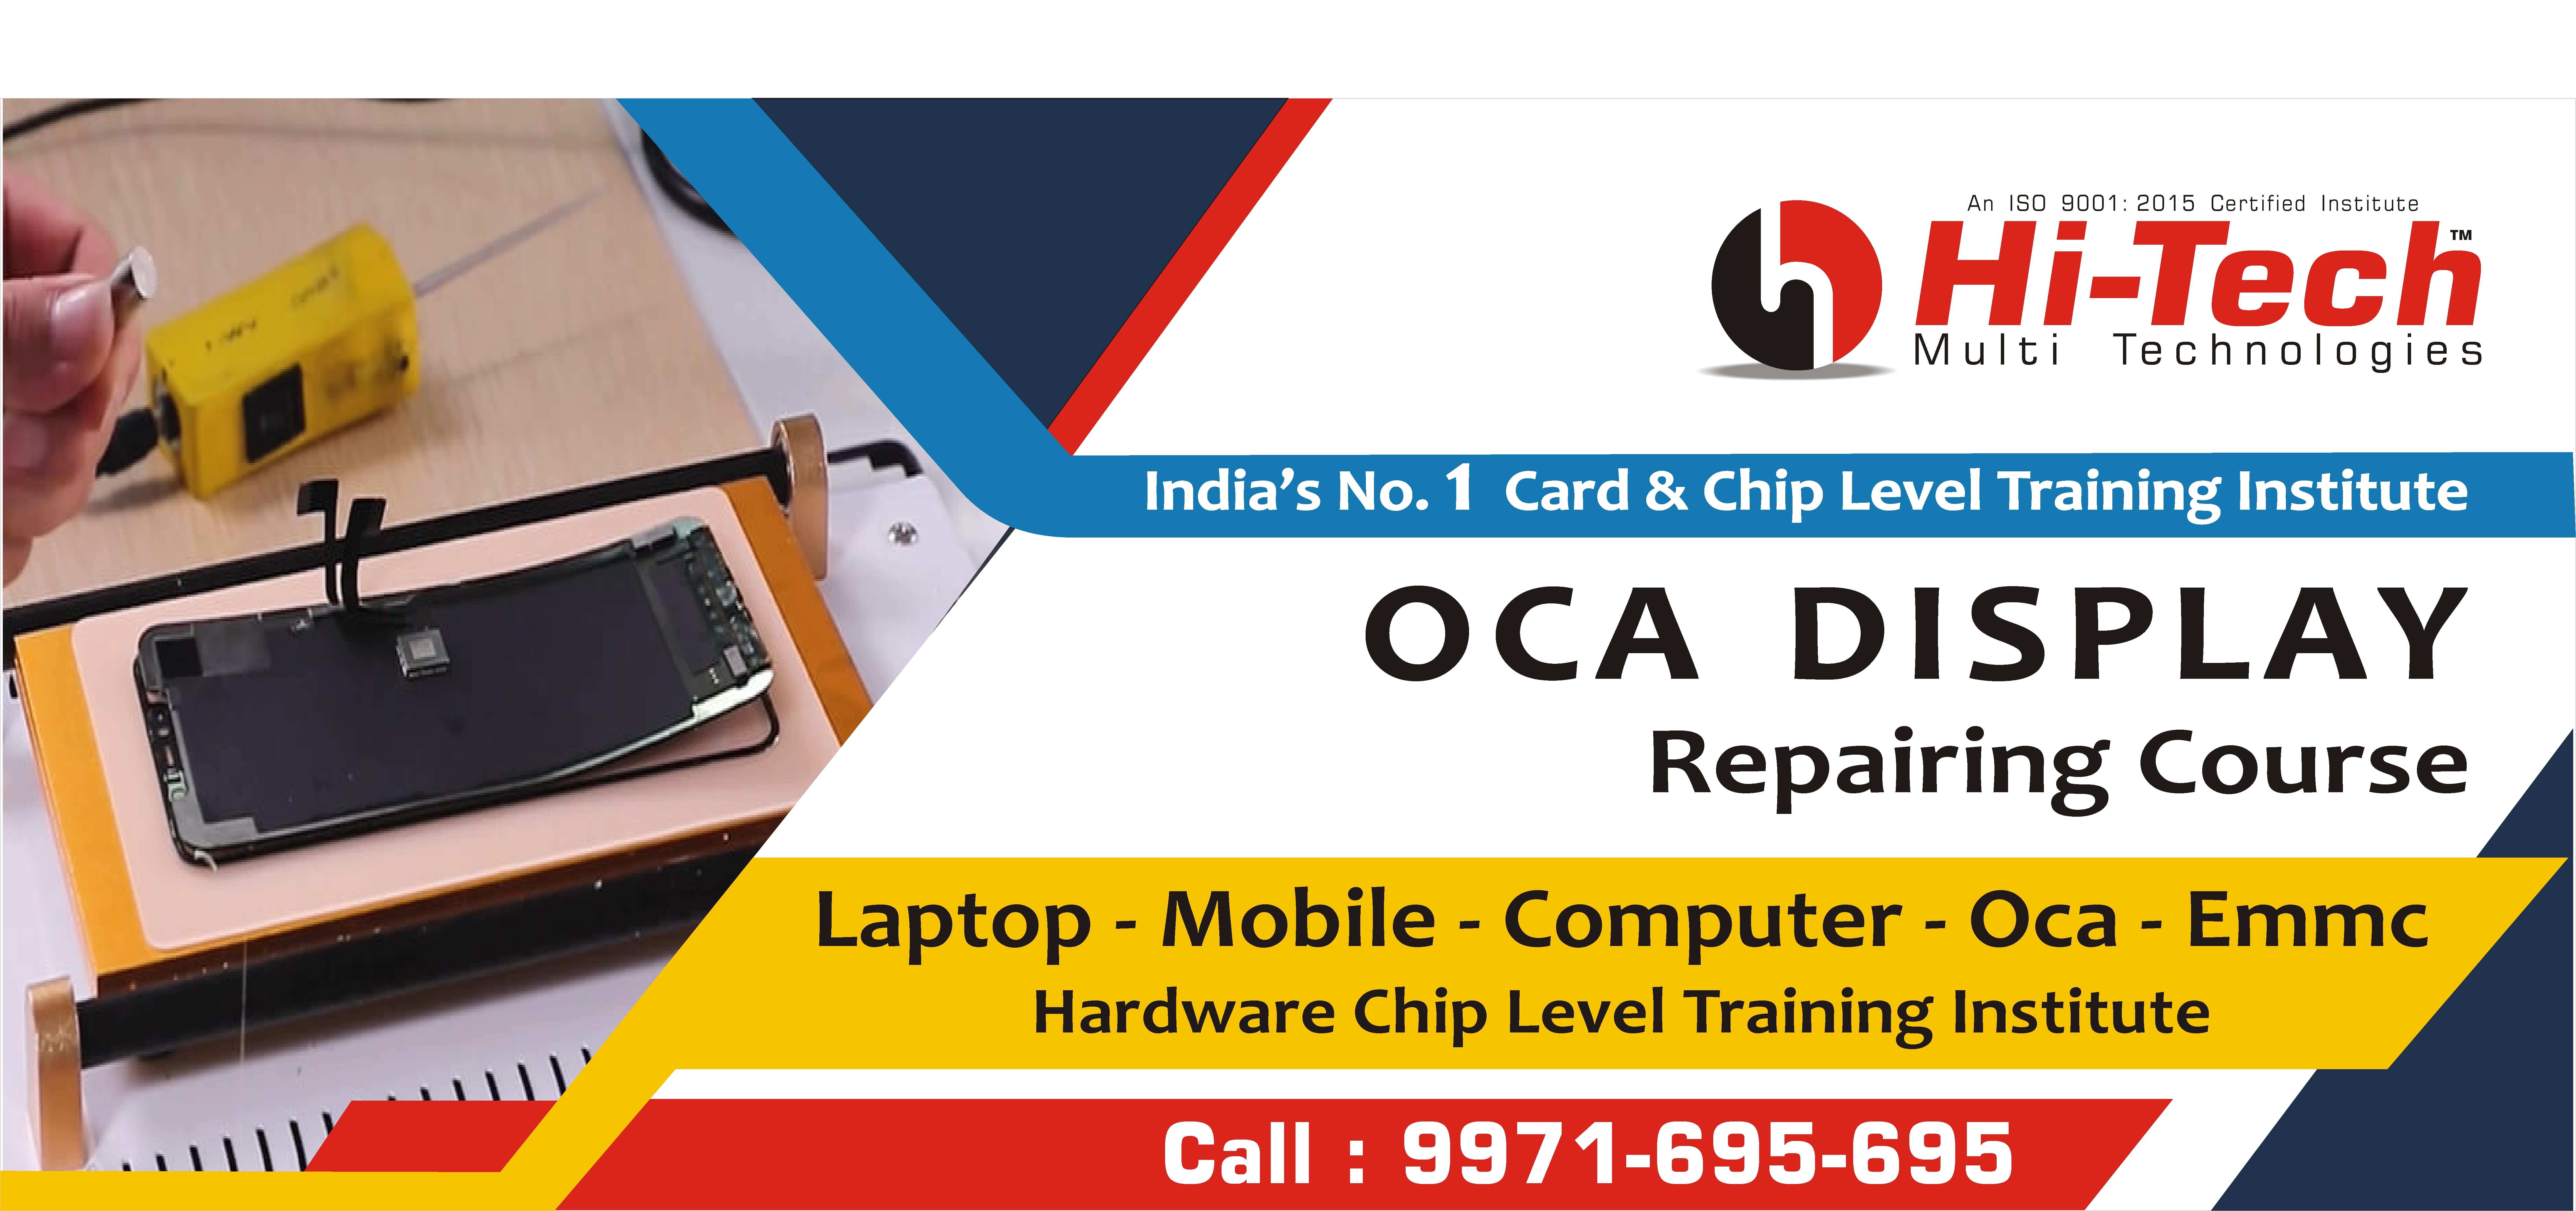 OCA Display Mobile Repairing Course